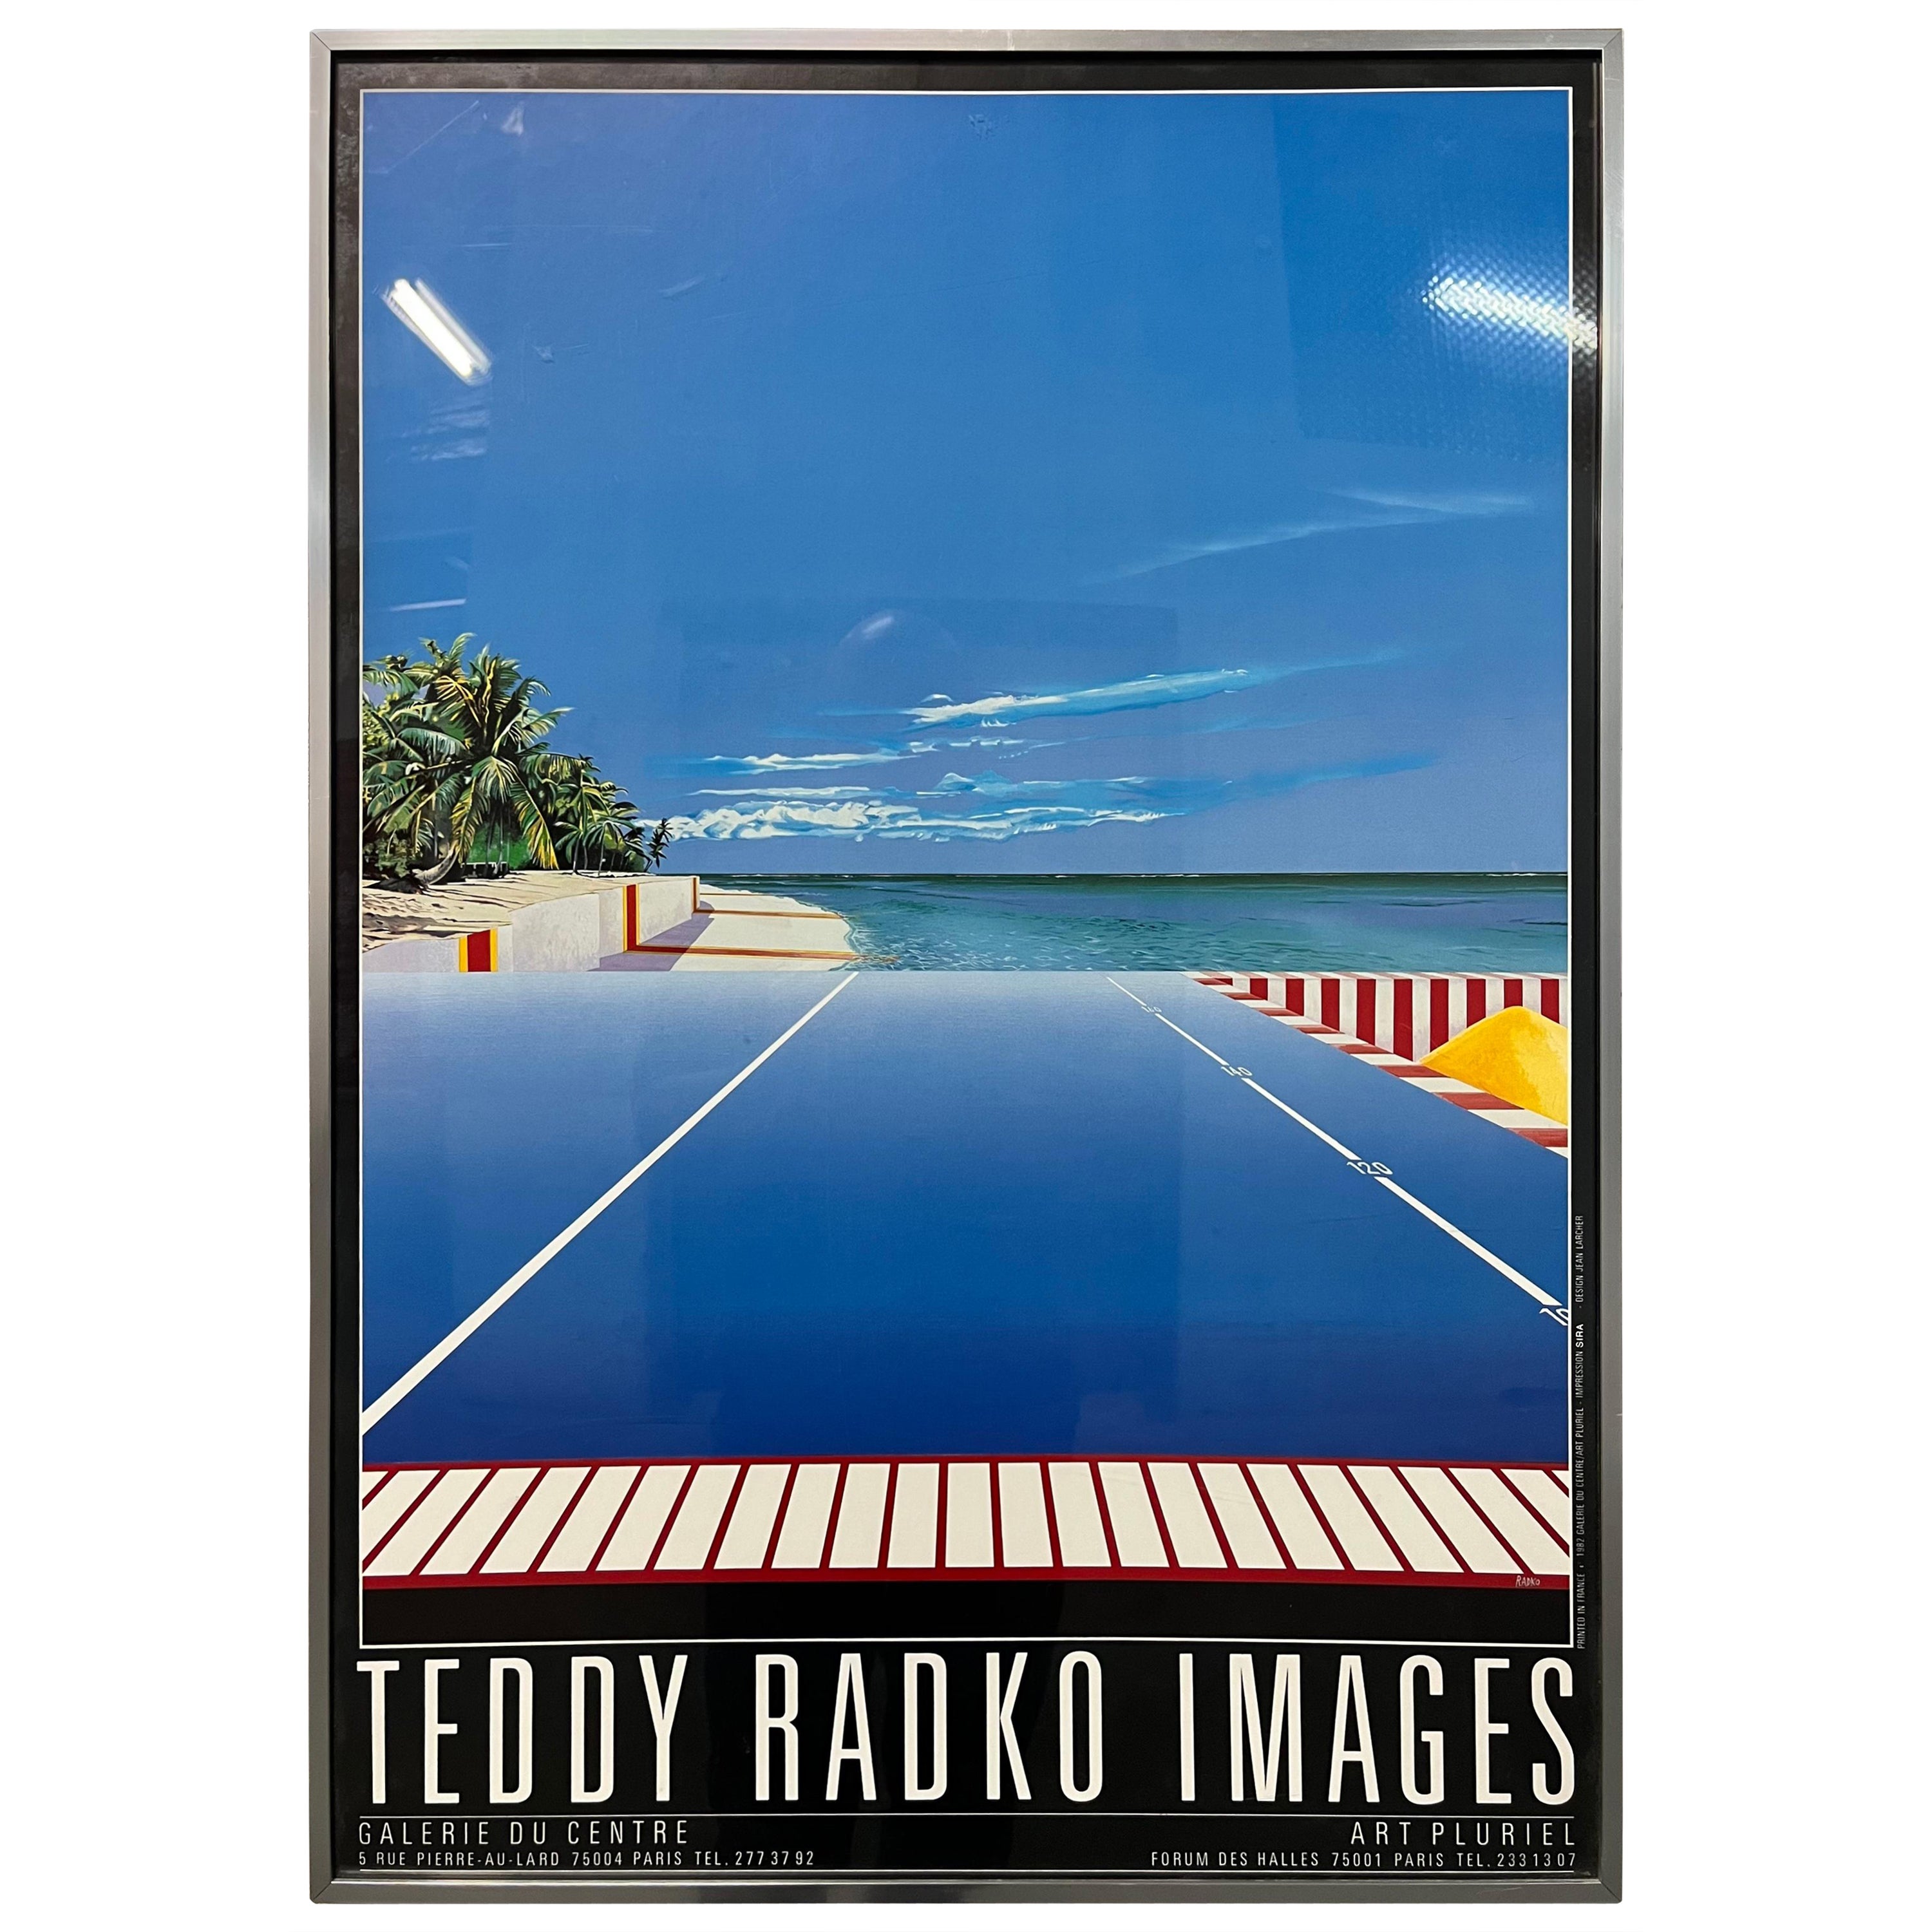 Original gerahmtes Originalplakat, Teddy Radko Images Exhibition, 1980er Jahre. im Angebot